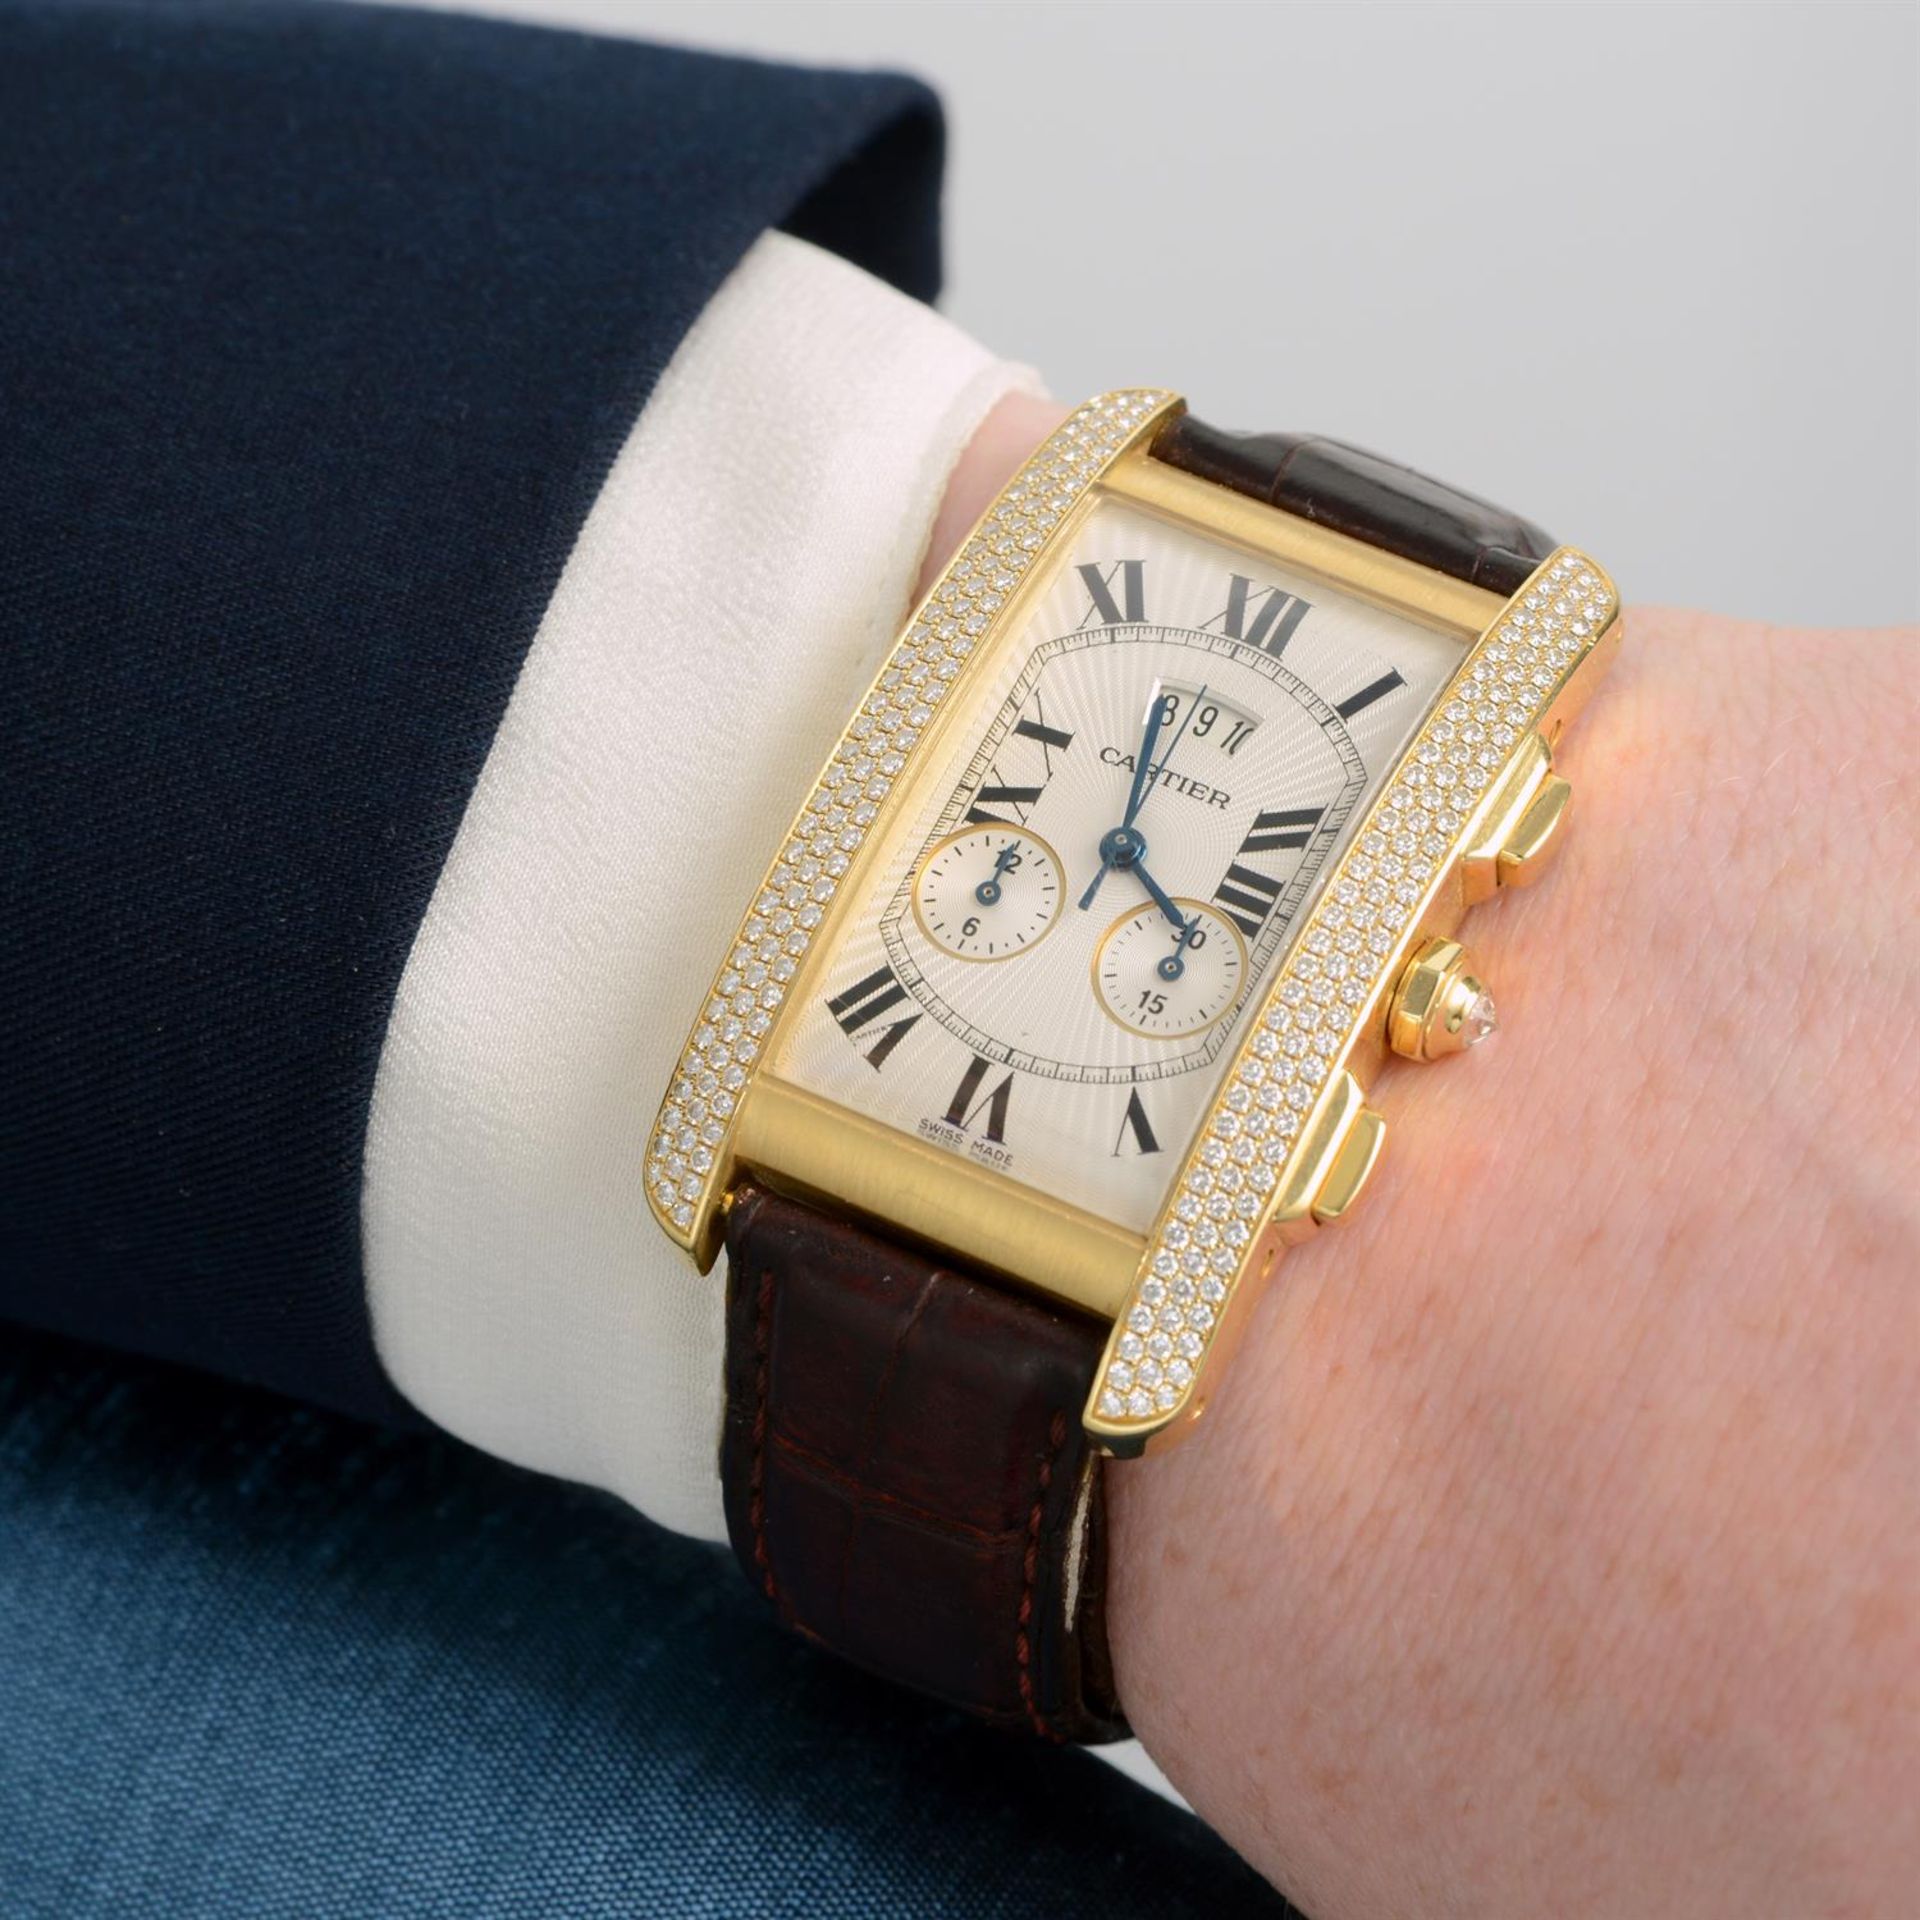 CARTIER - a factory diamond set 18ct gold Tank Américaine chronograph wrist watch, 27x37mm. - Image 5 of 5